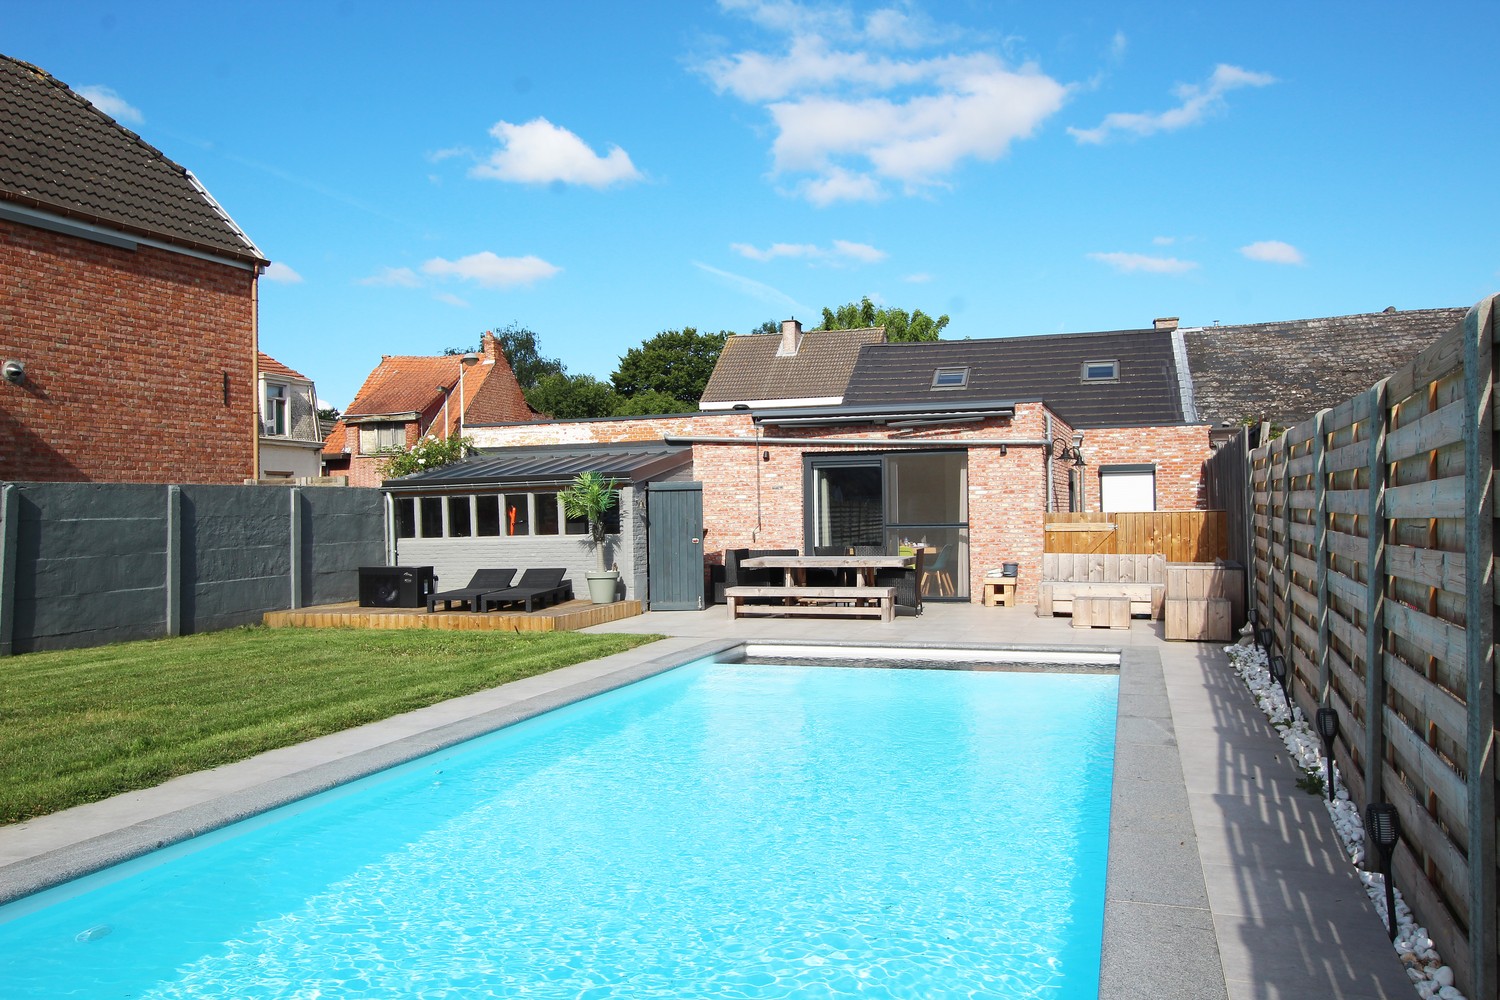 Verrassend ruime woning met riante tuin (774m²) en verwarmd zwembad in hartje Broechem! afbeelding 22